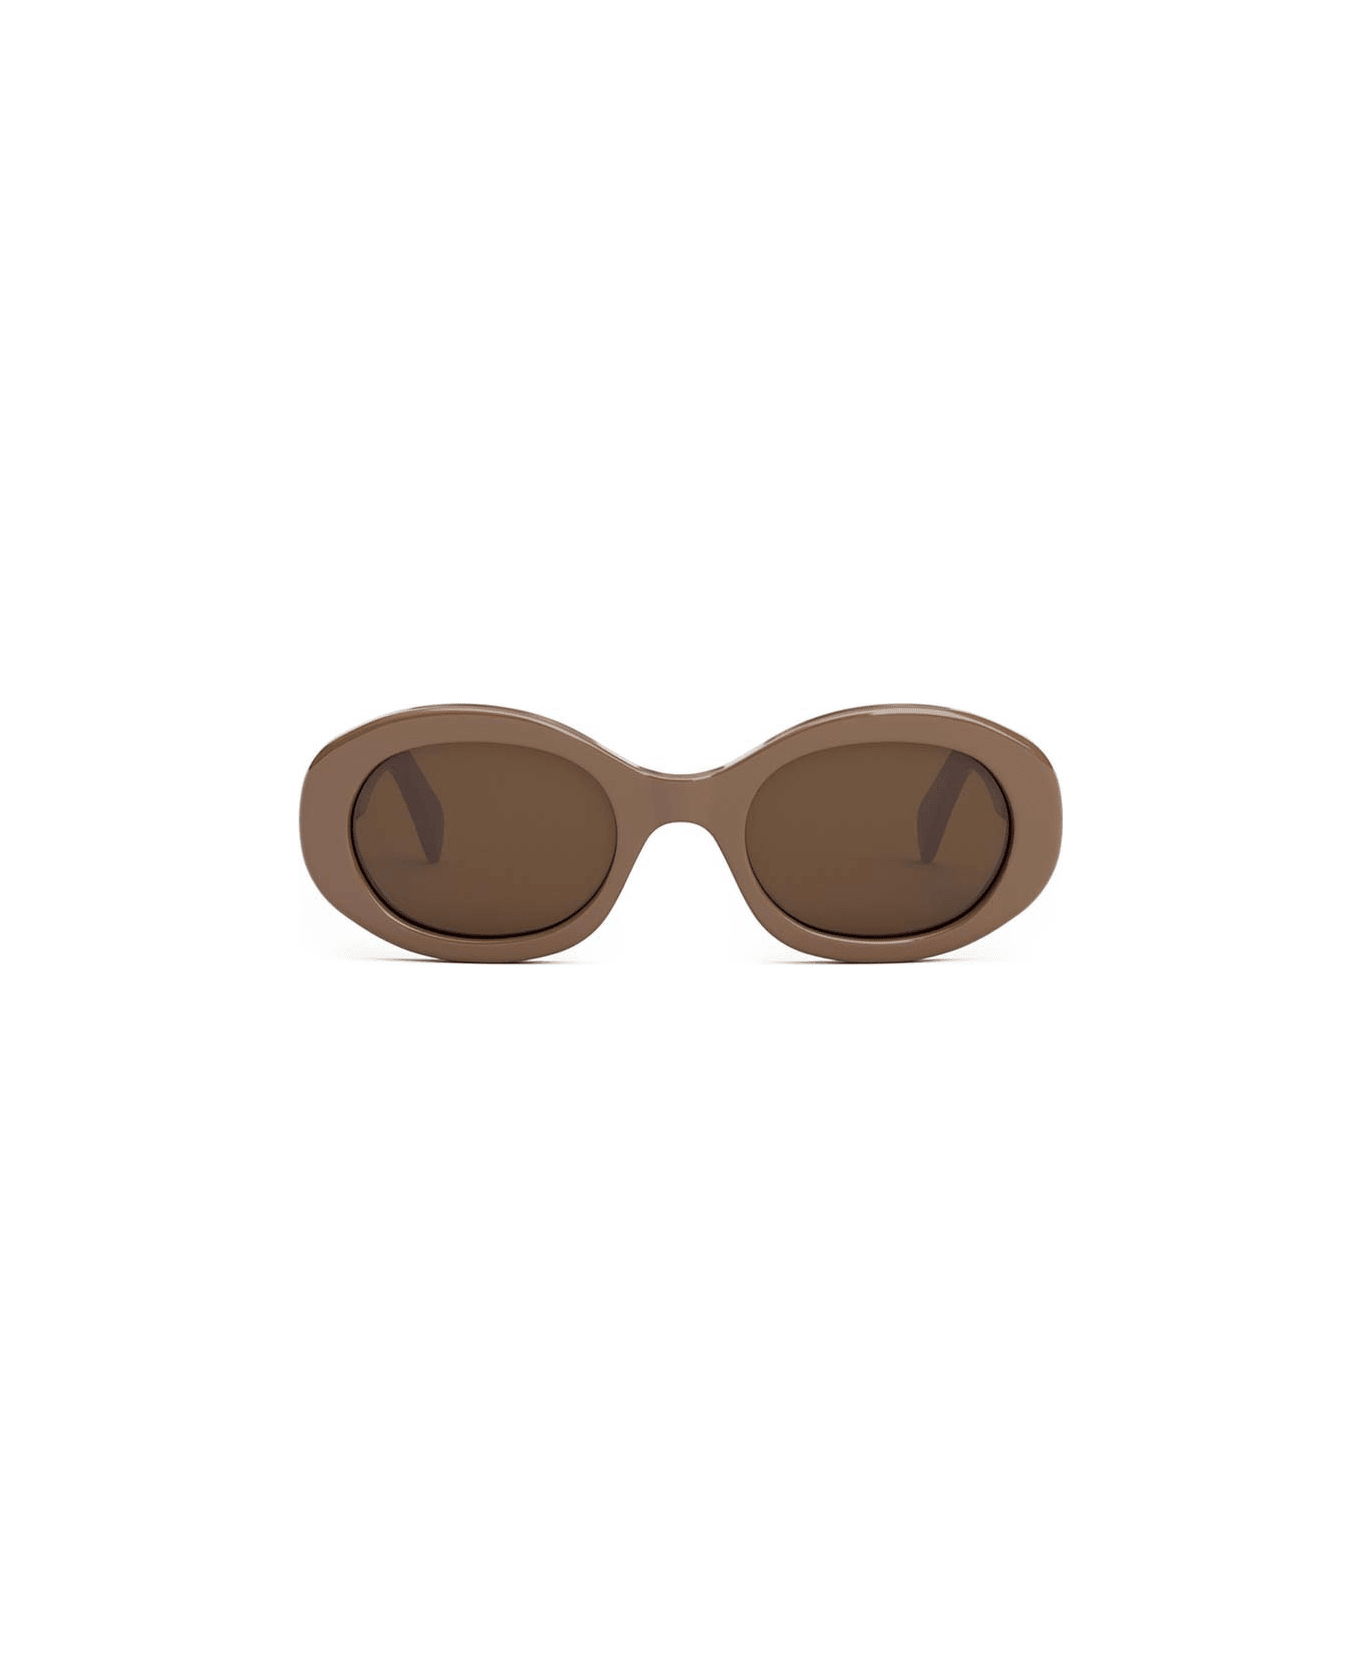 Celine Sunglasses - Caramello/Marrone サングラス